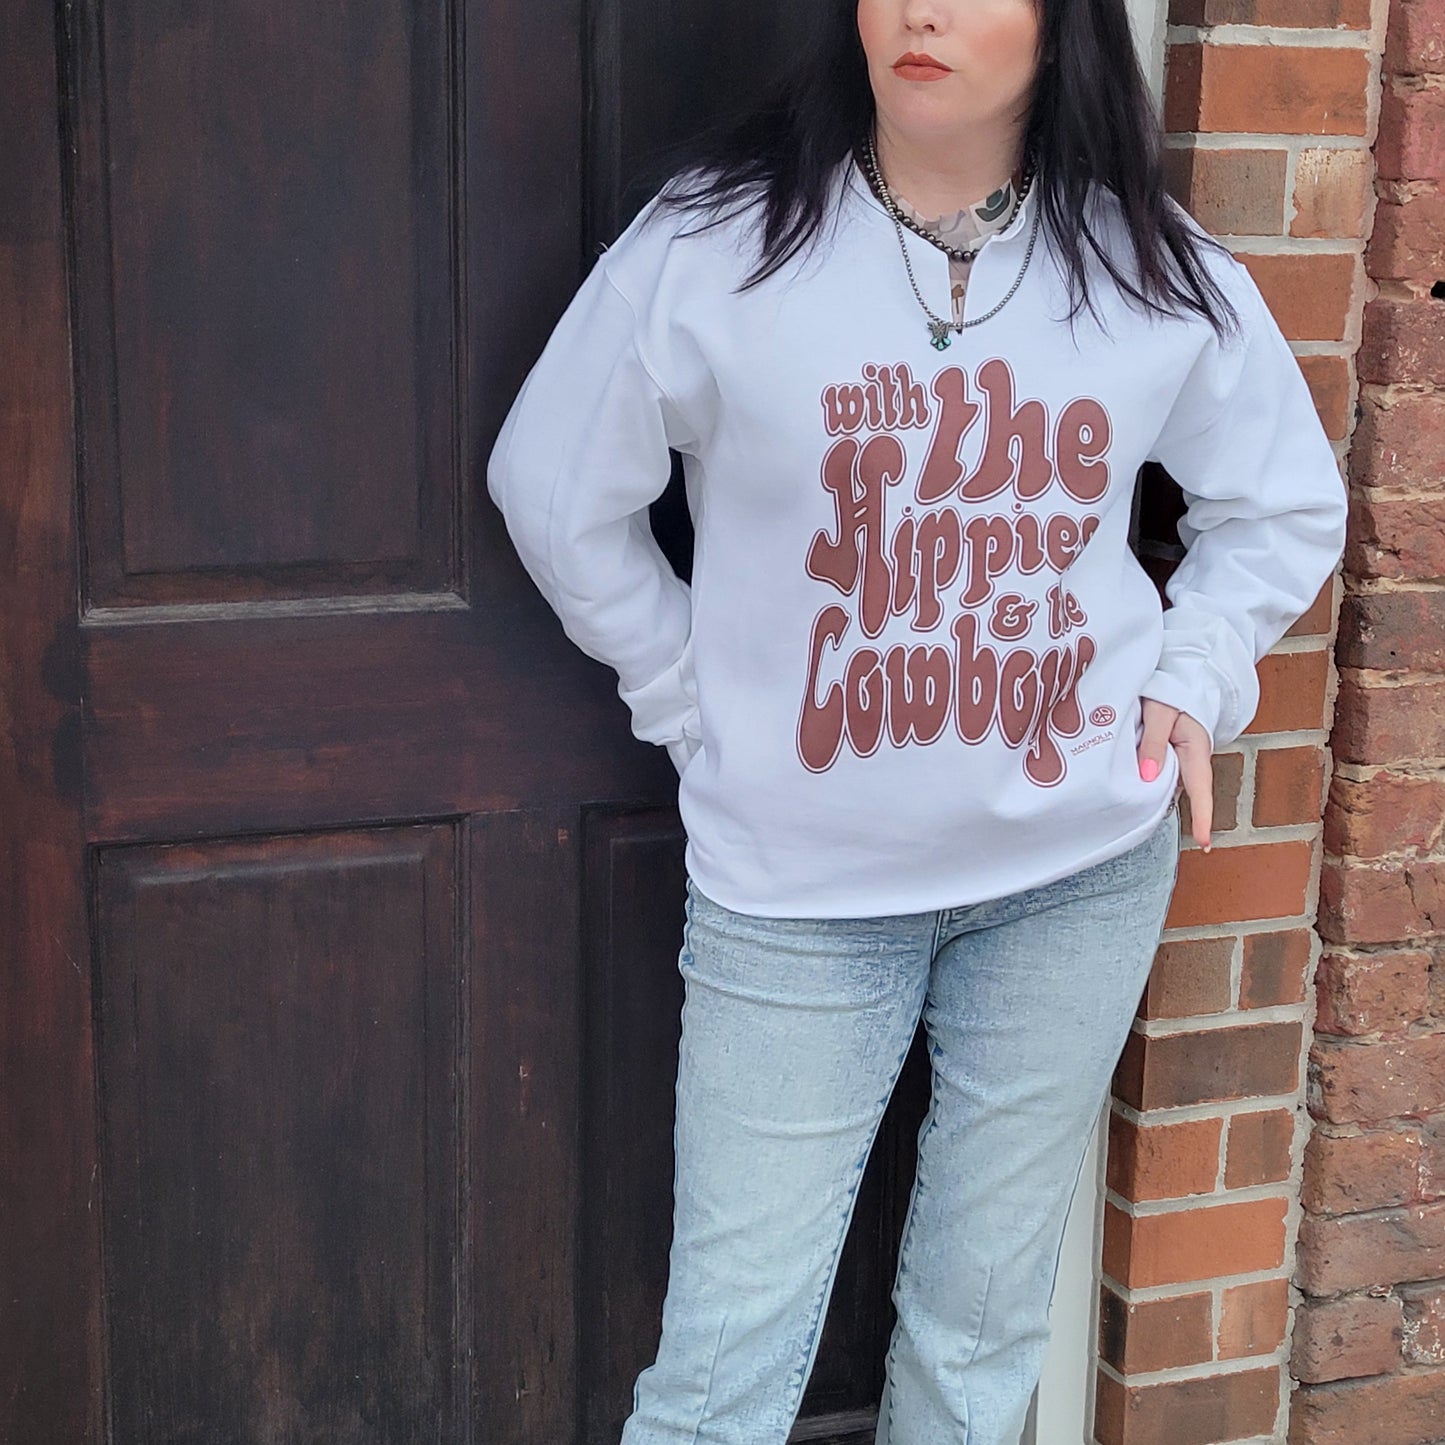 Hippies & Cowboys Sweatshirt